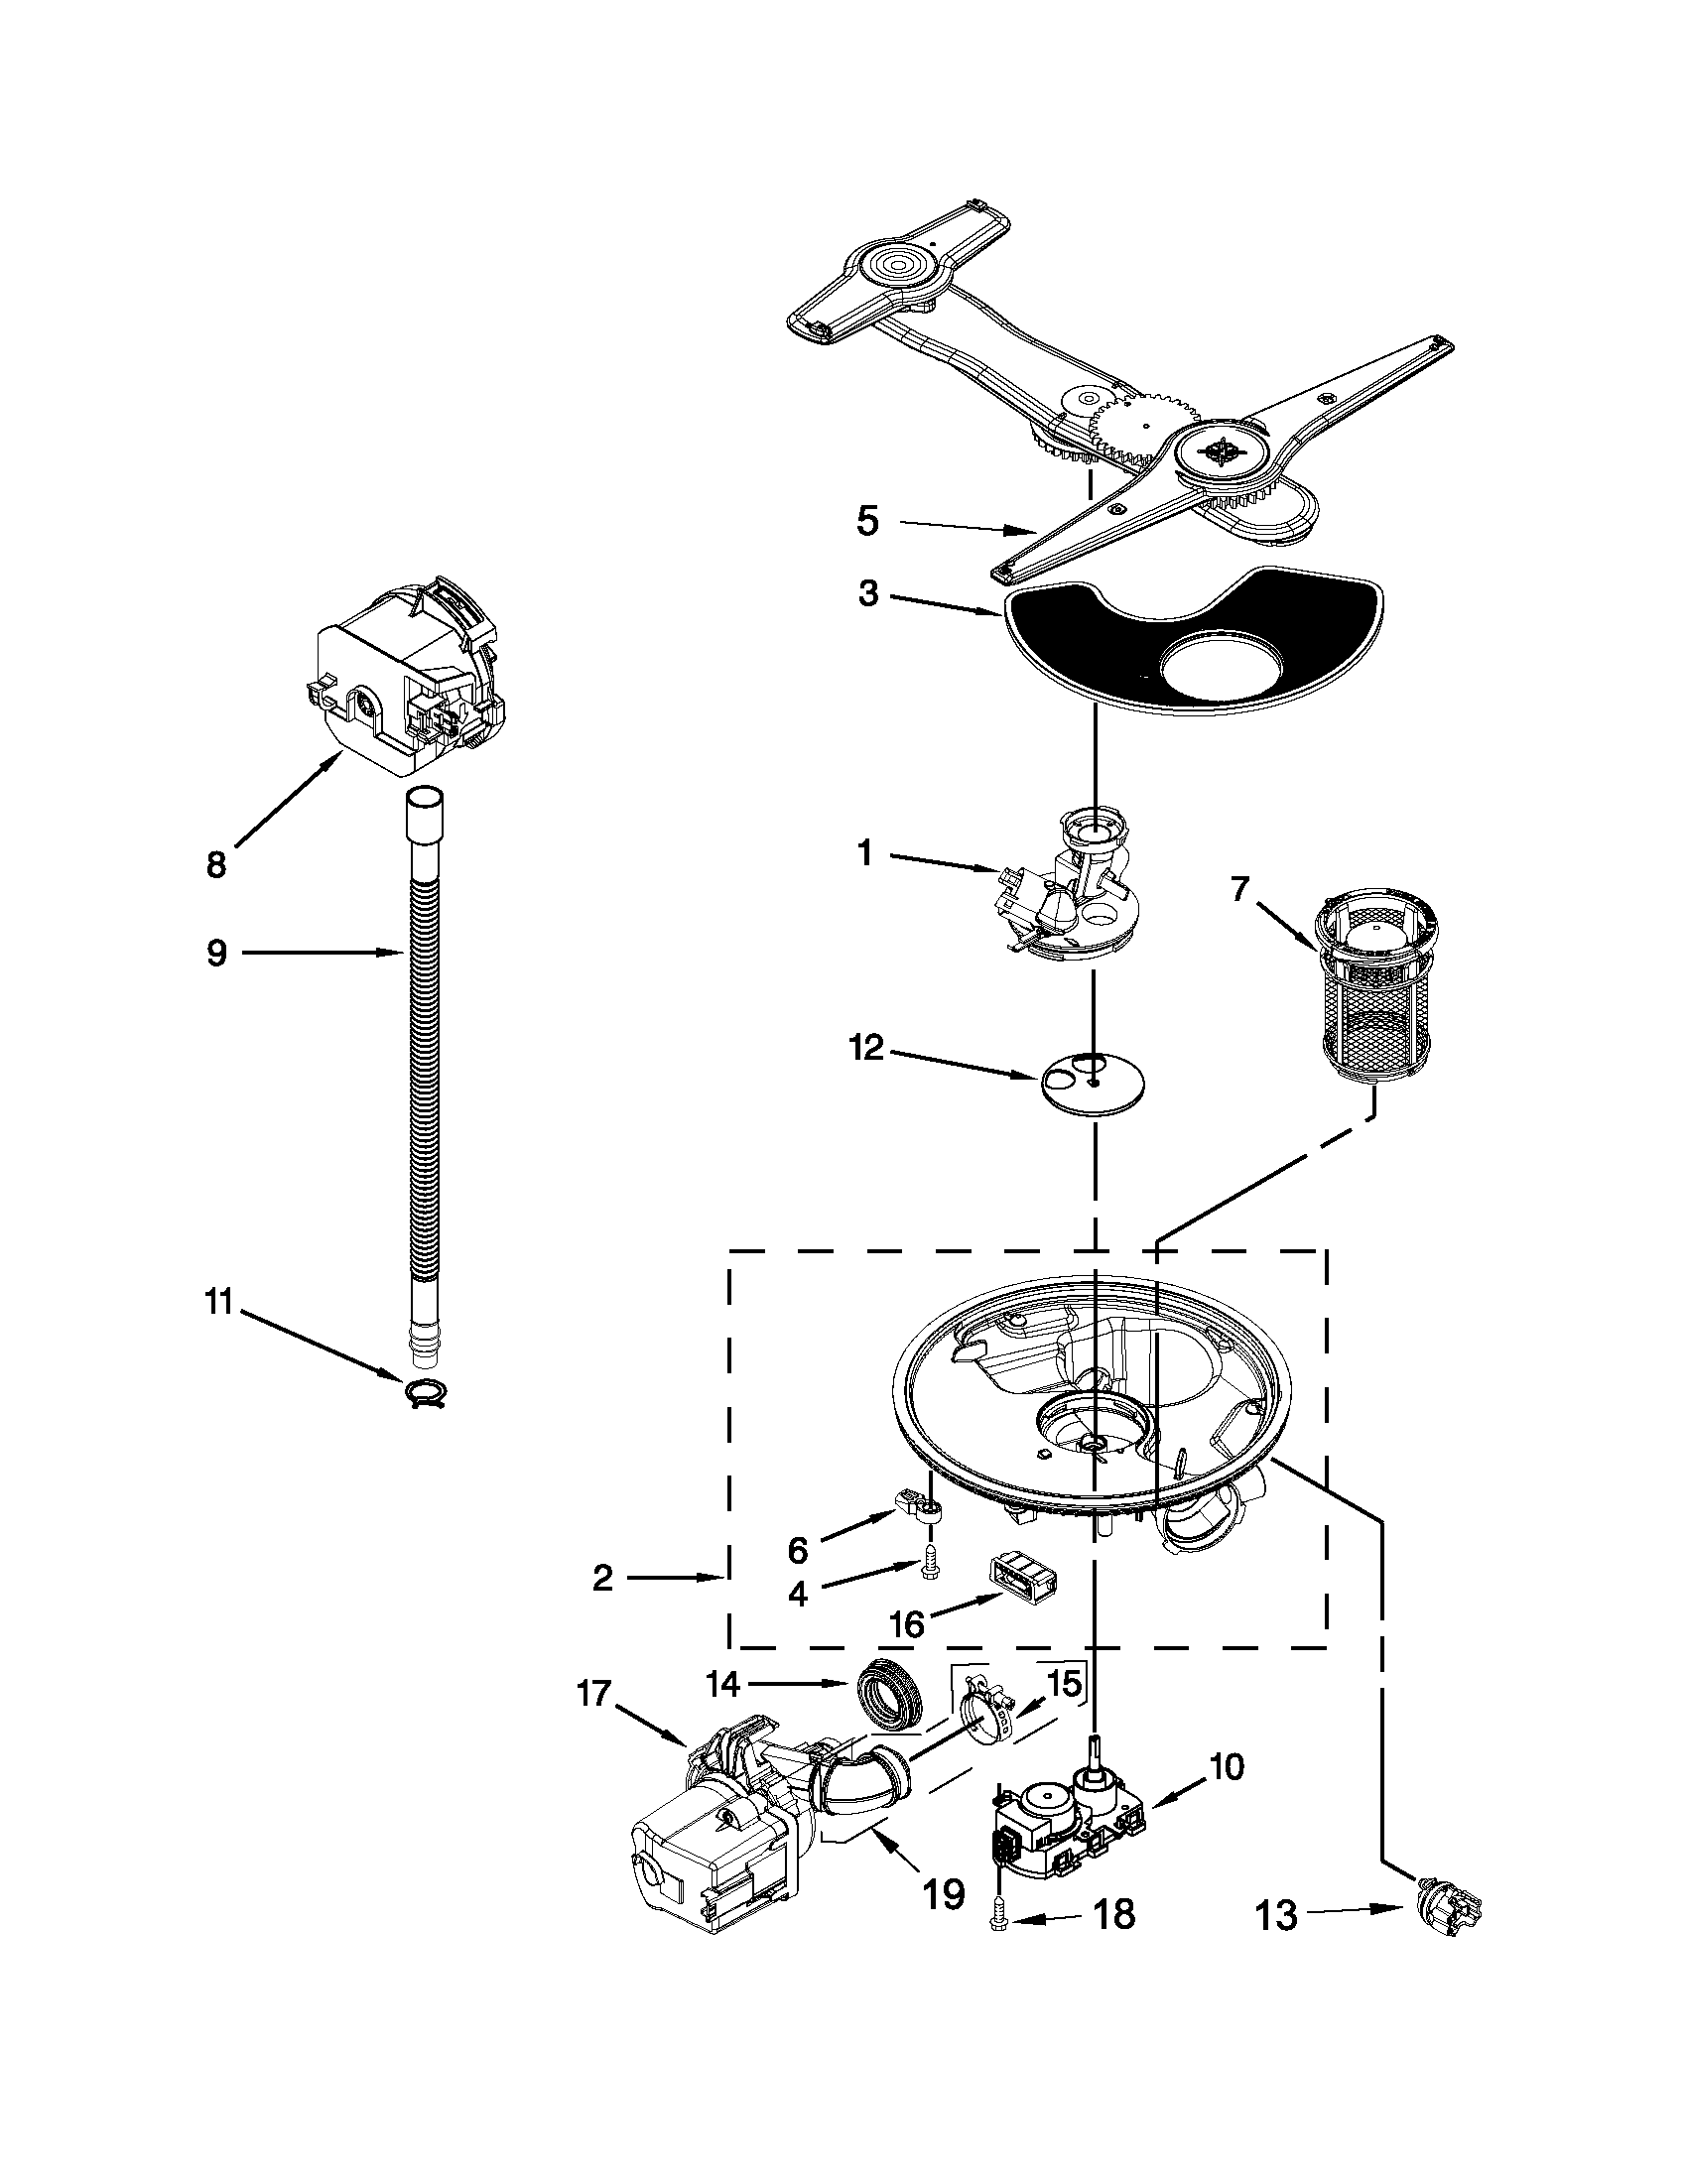 parts-for-kenmore-elite-dishwasher-model-665-diagram-reviewmotors-co